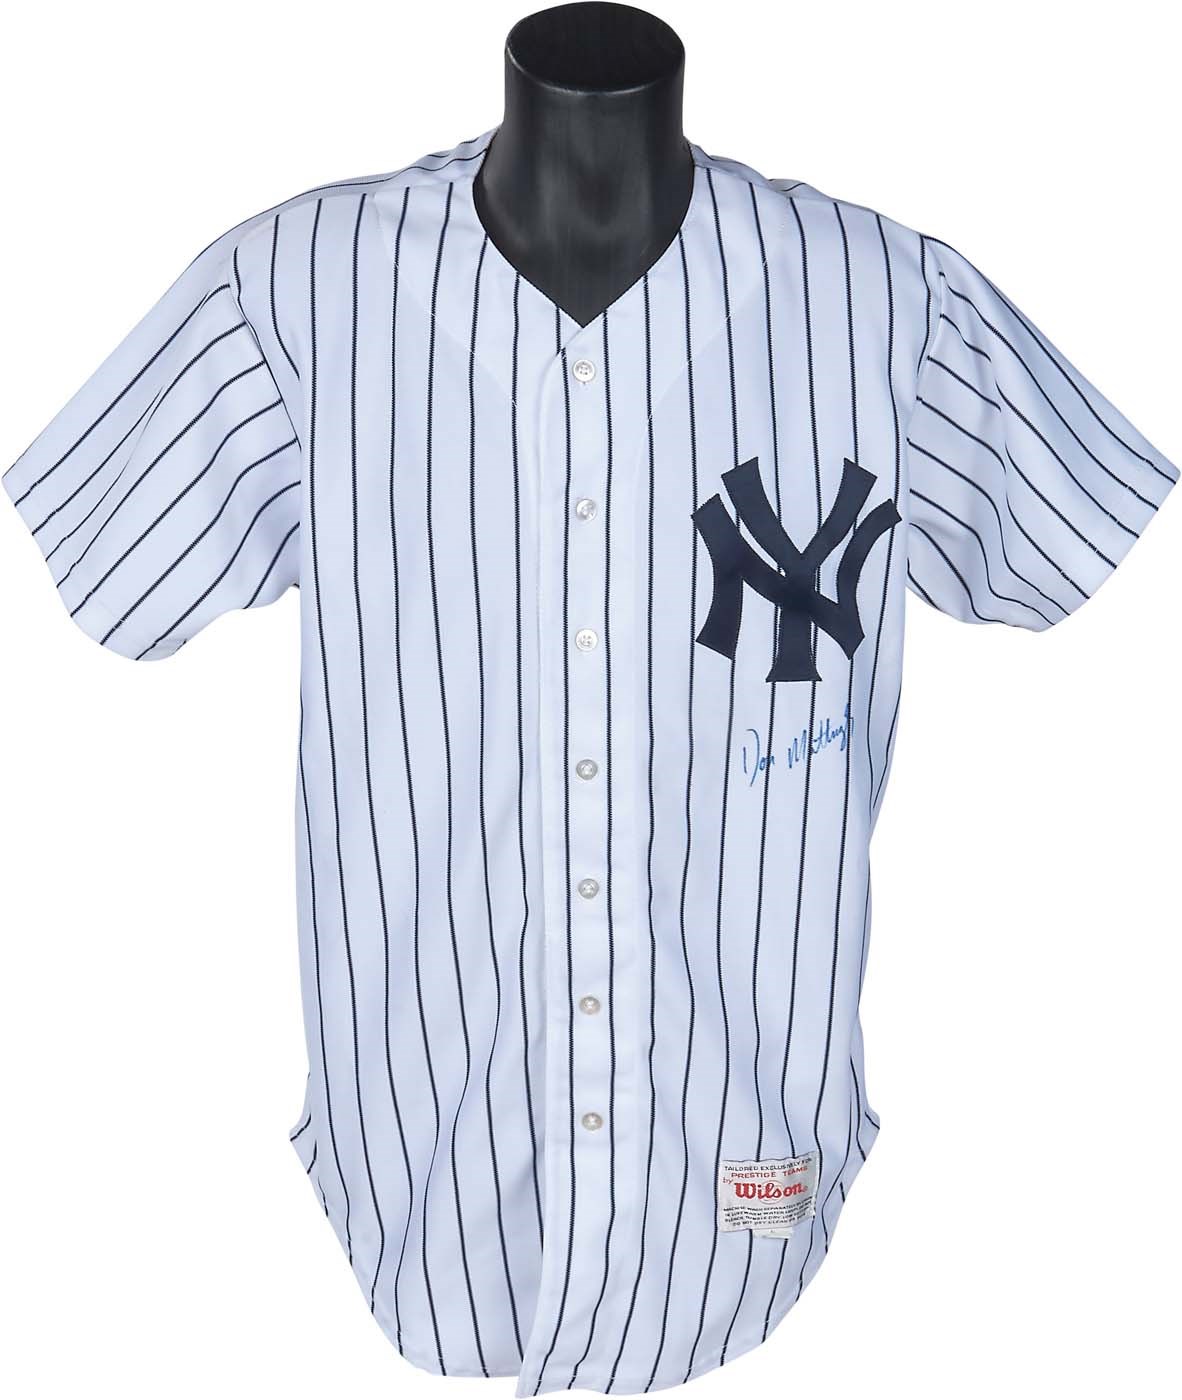 - 1989 Don Mattingly New York Yankees Game Worn Jersey